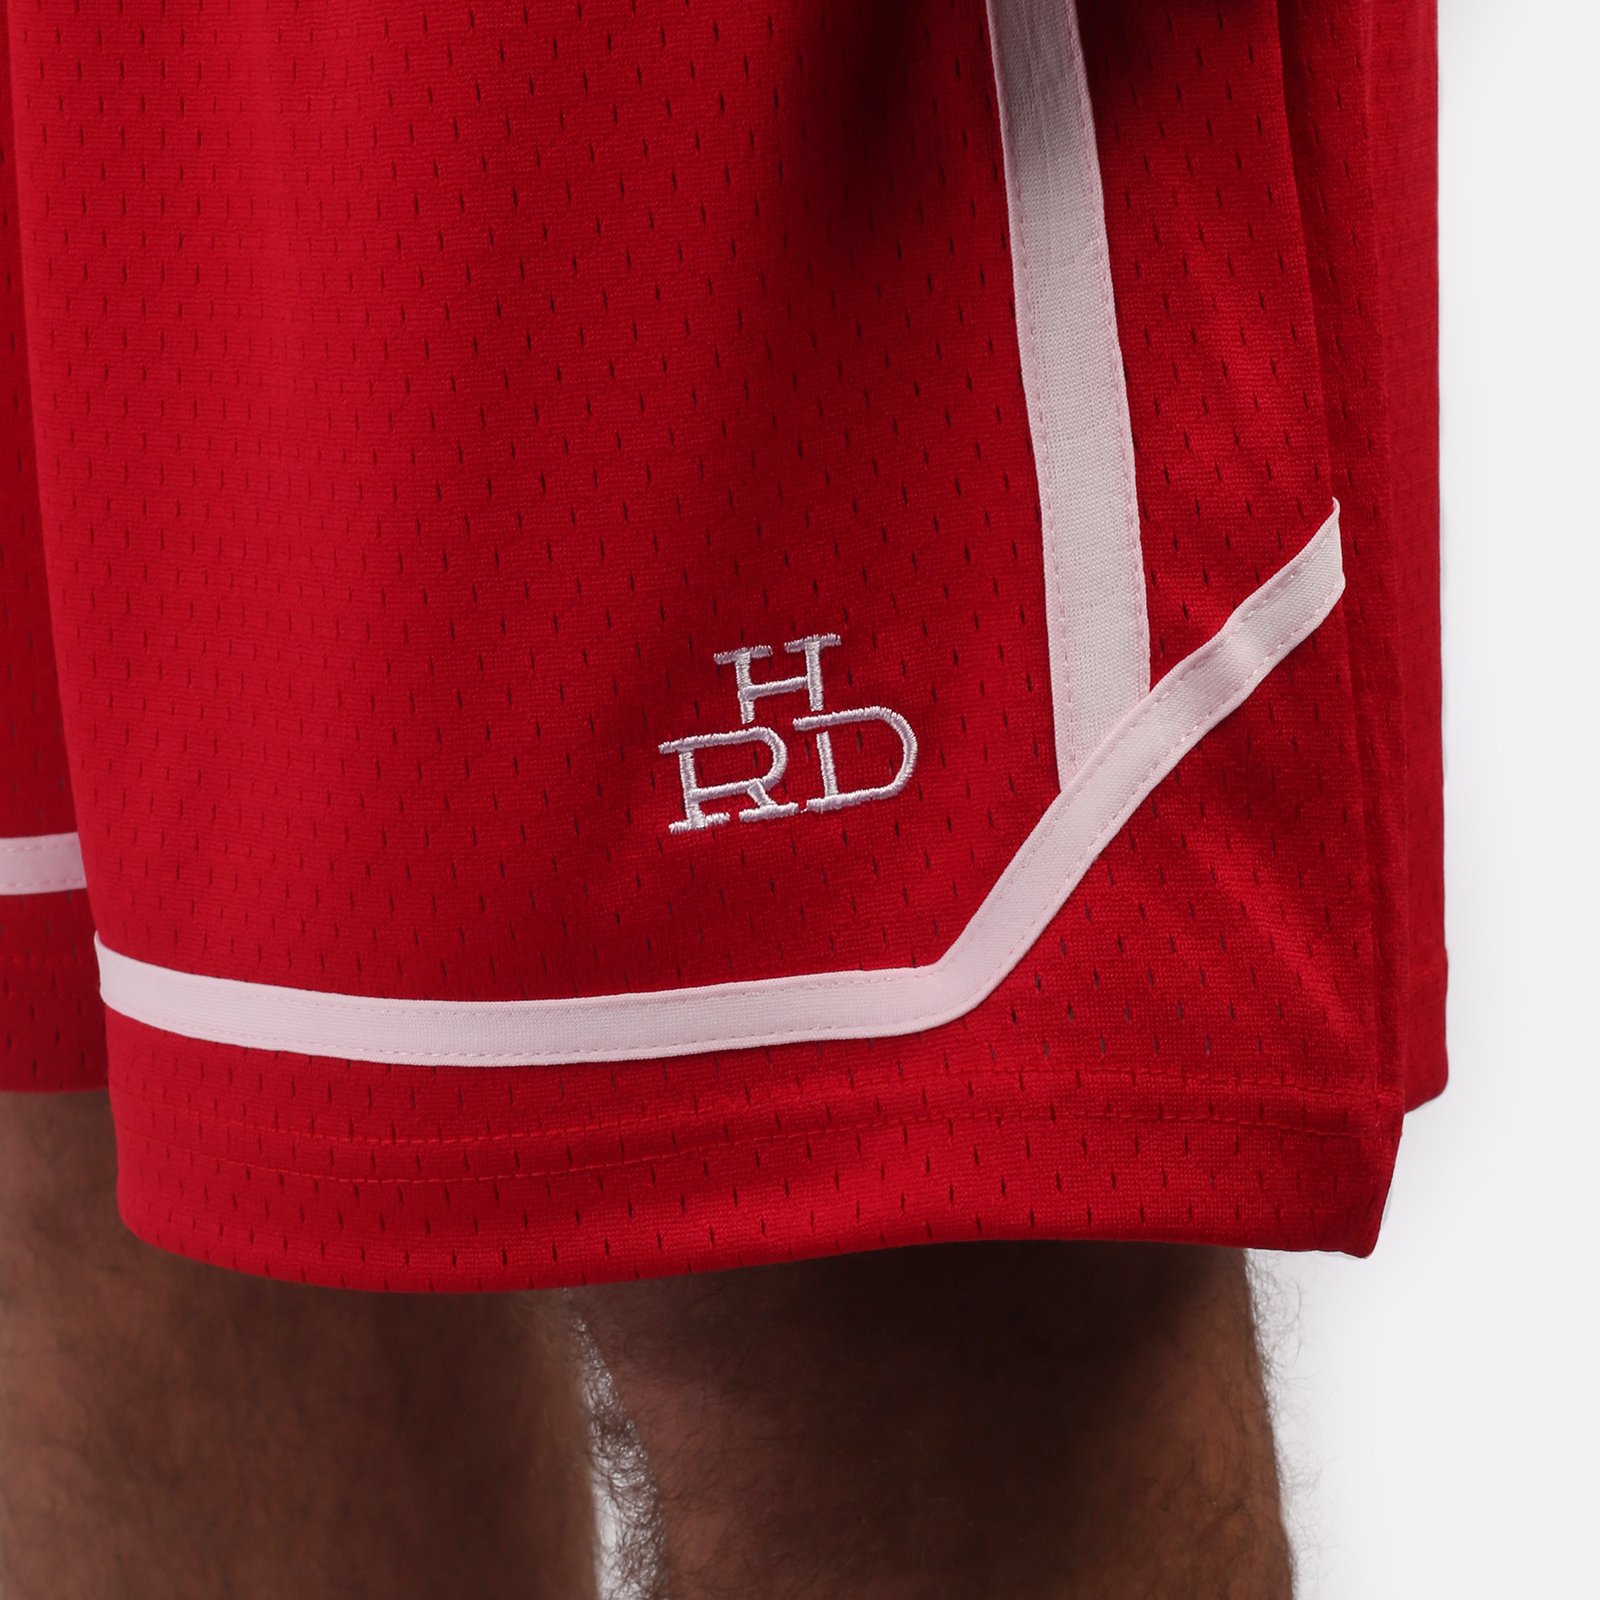 мужские красные шорты Hard Teammate Teammate short-red/wht - цена, описание, фото 3